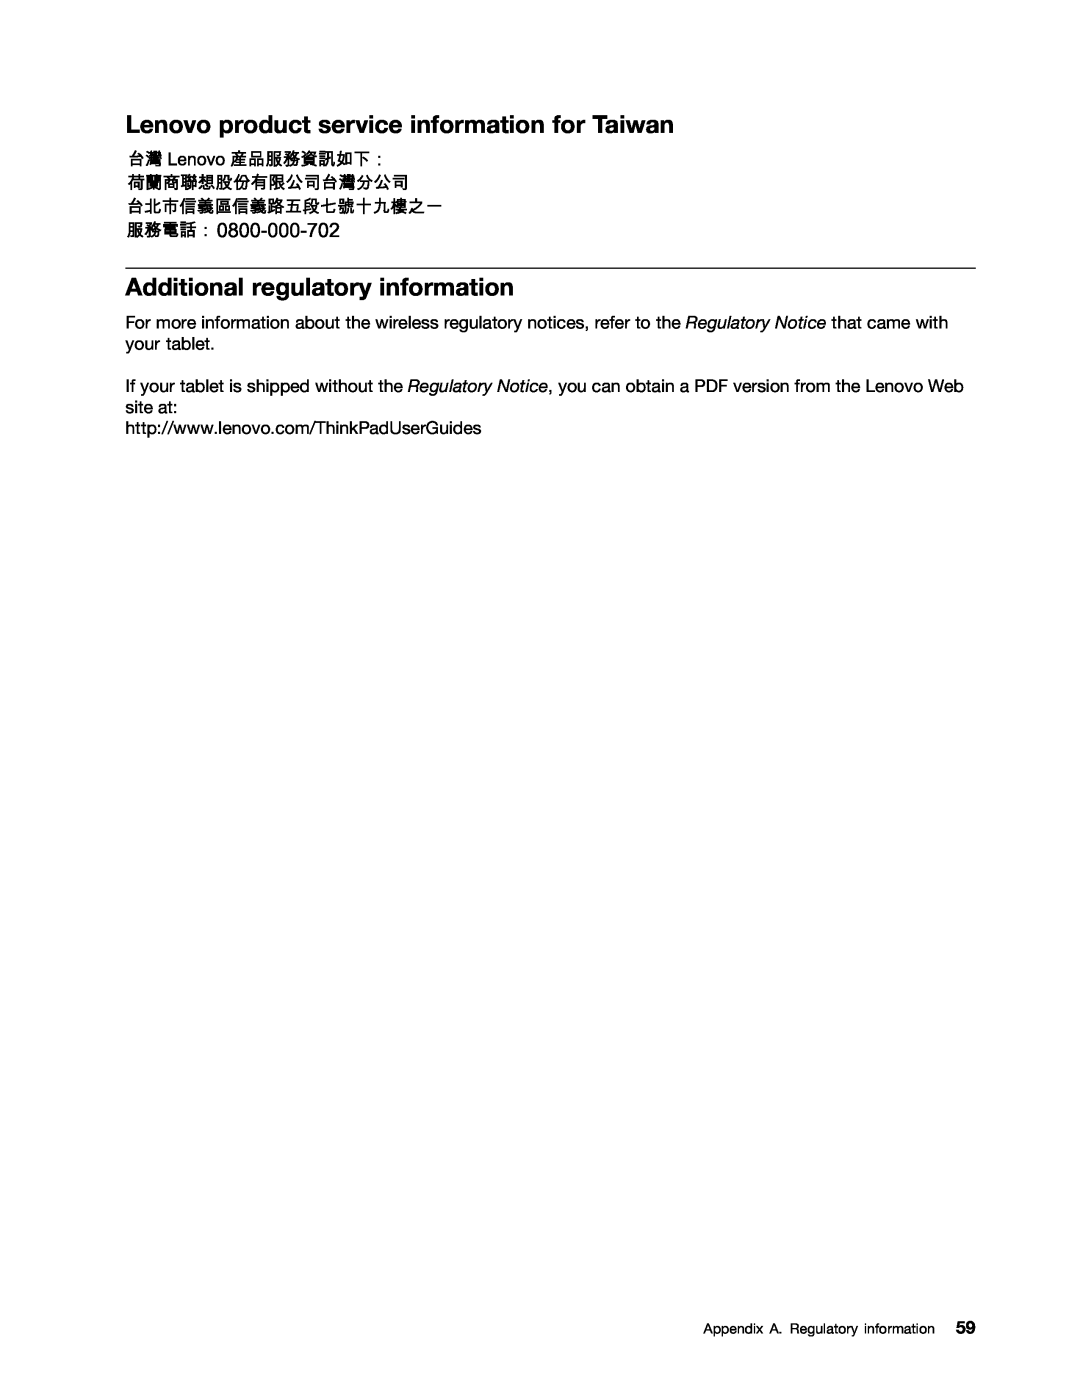 Lenovo 368229U, 36822AU, 368222U, 36795YU Lenovo product service information for Taiwan, Additional regulatory information 